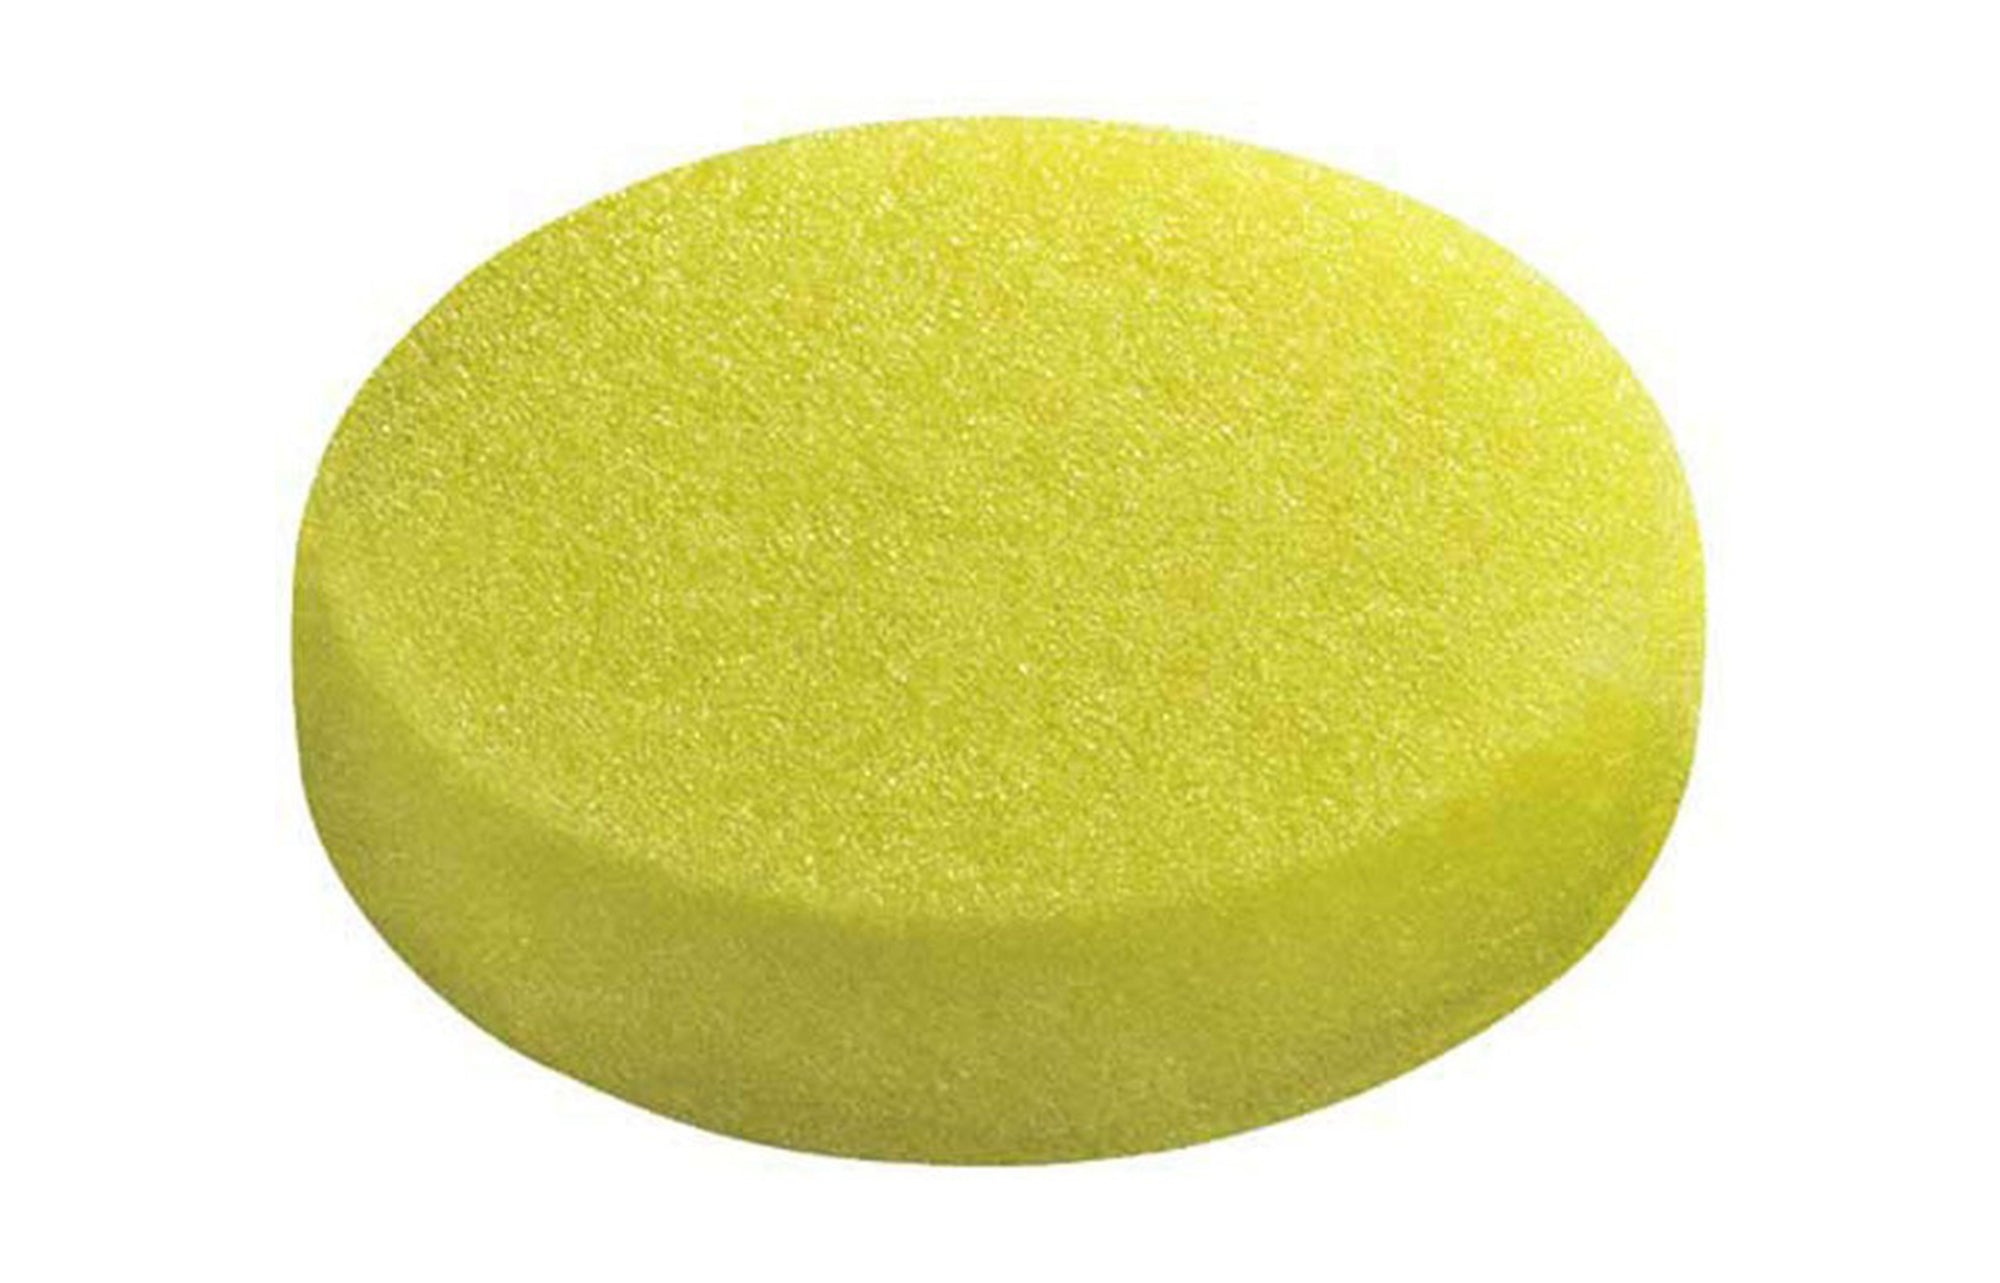 Festool Foam Polishing Pad - Heavy Cut - Yellow